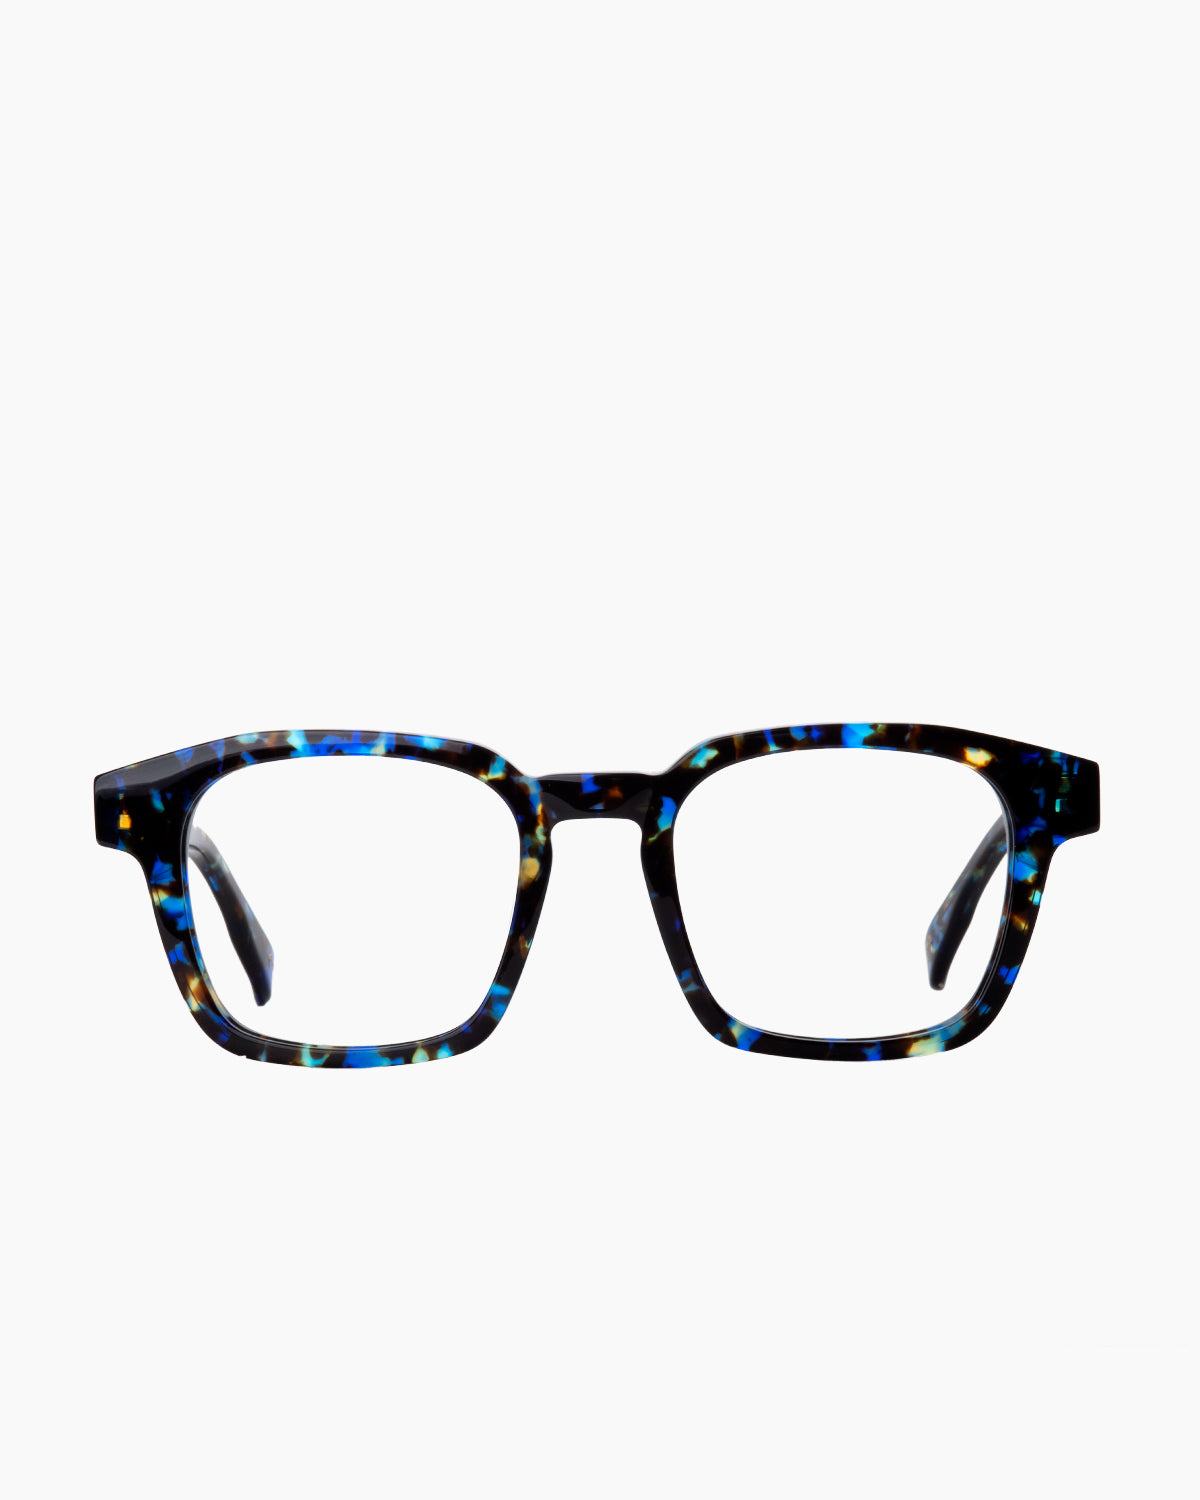 Spectacleeyeworks - Yolanta - c716 | Bar à lunettes:  Marie-Sophie Dion